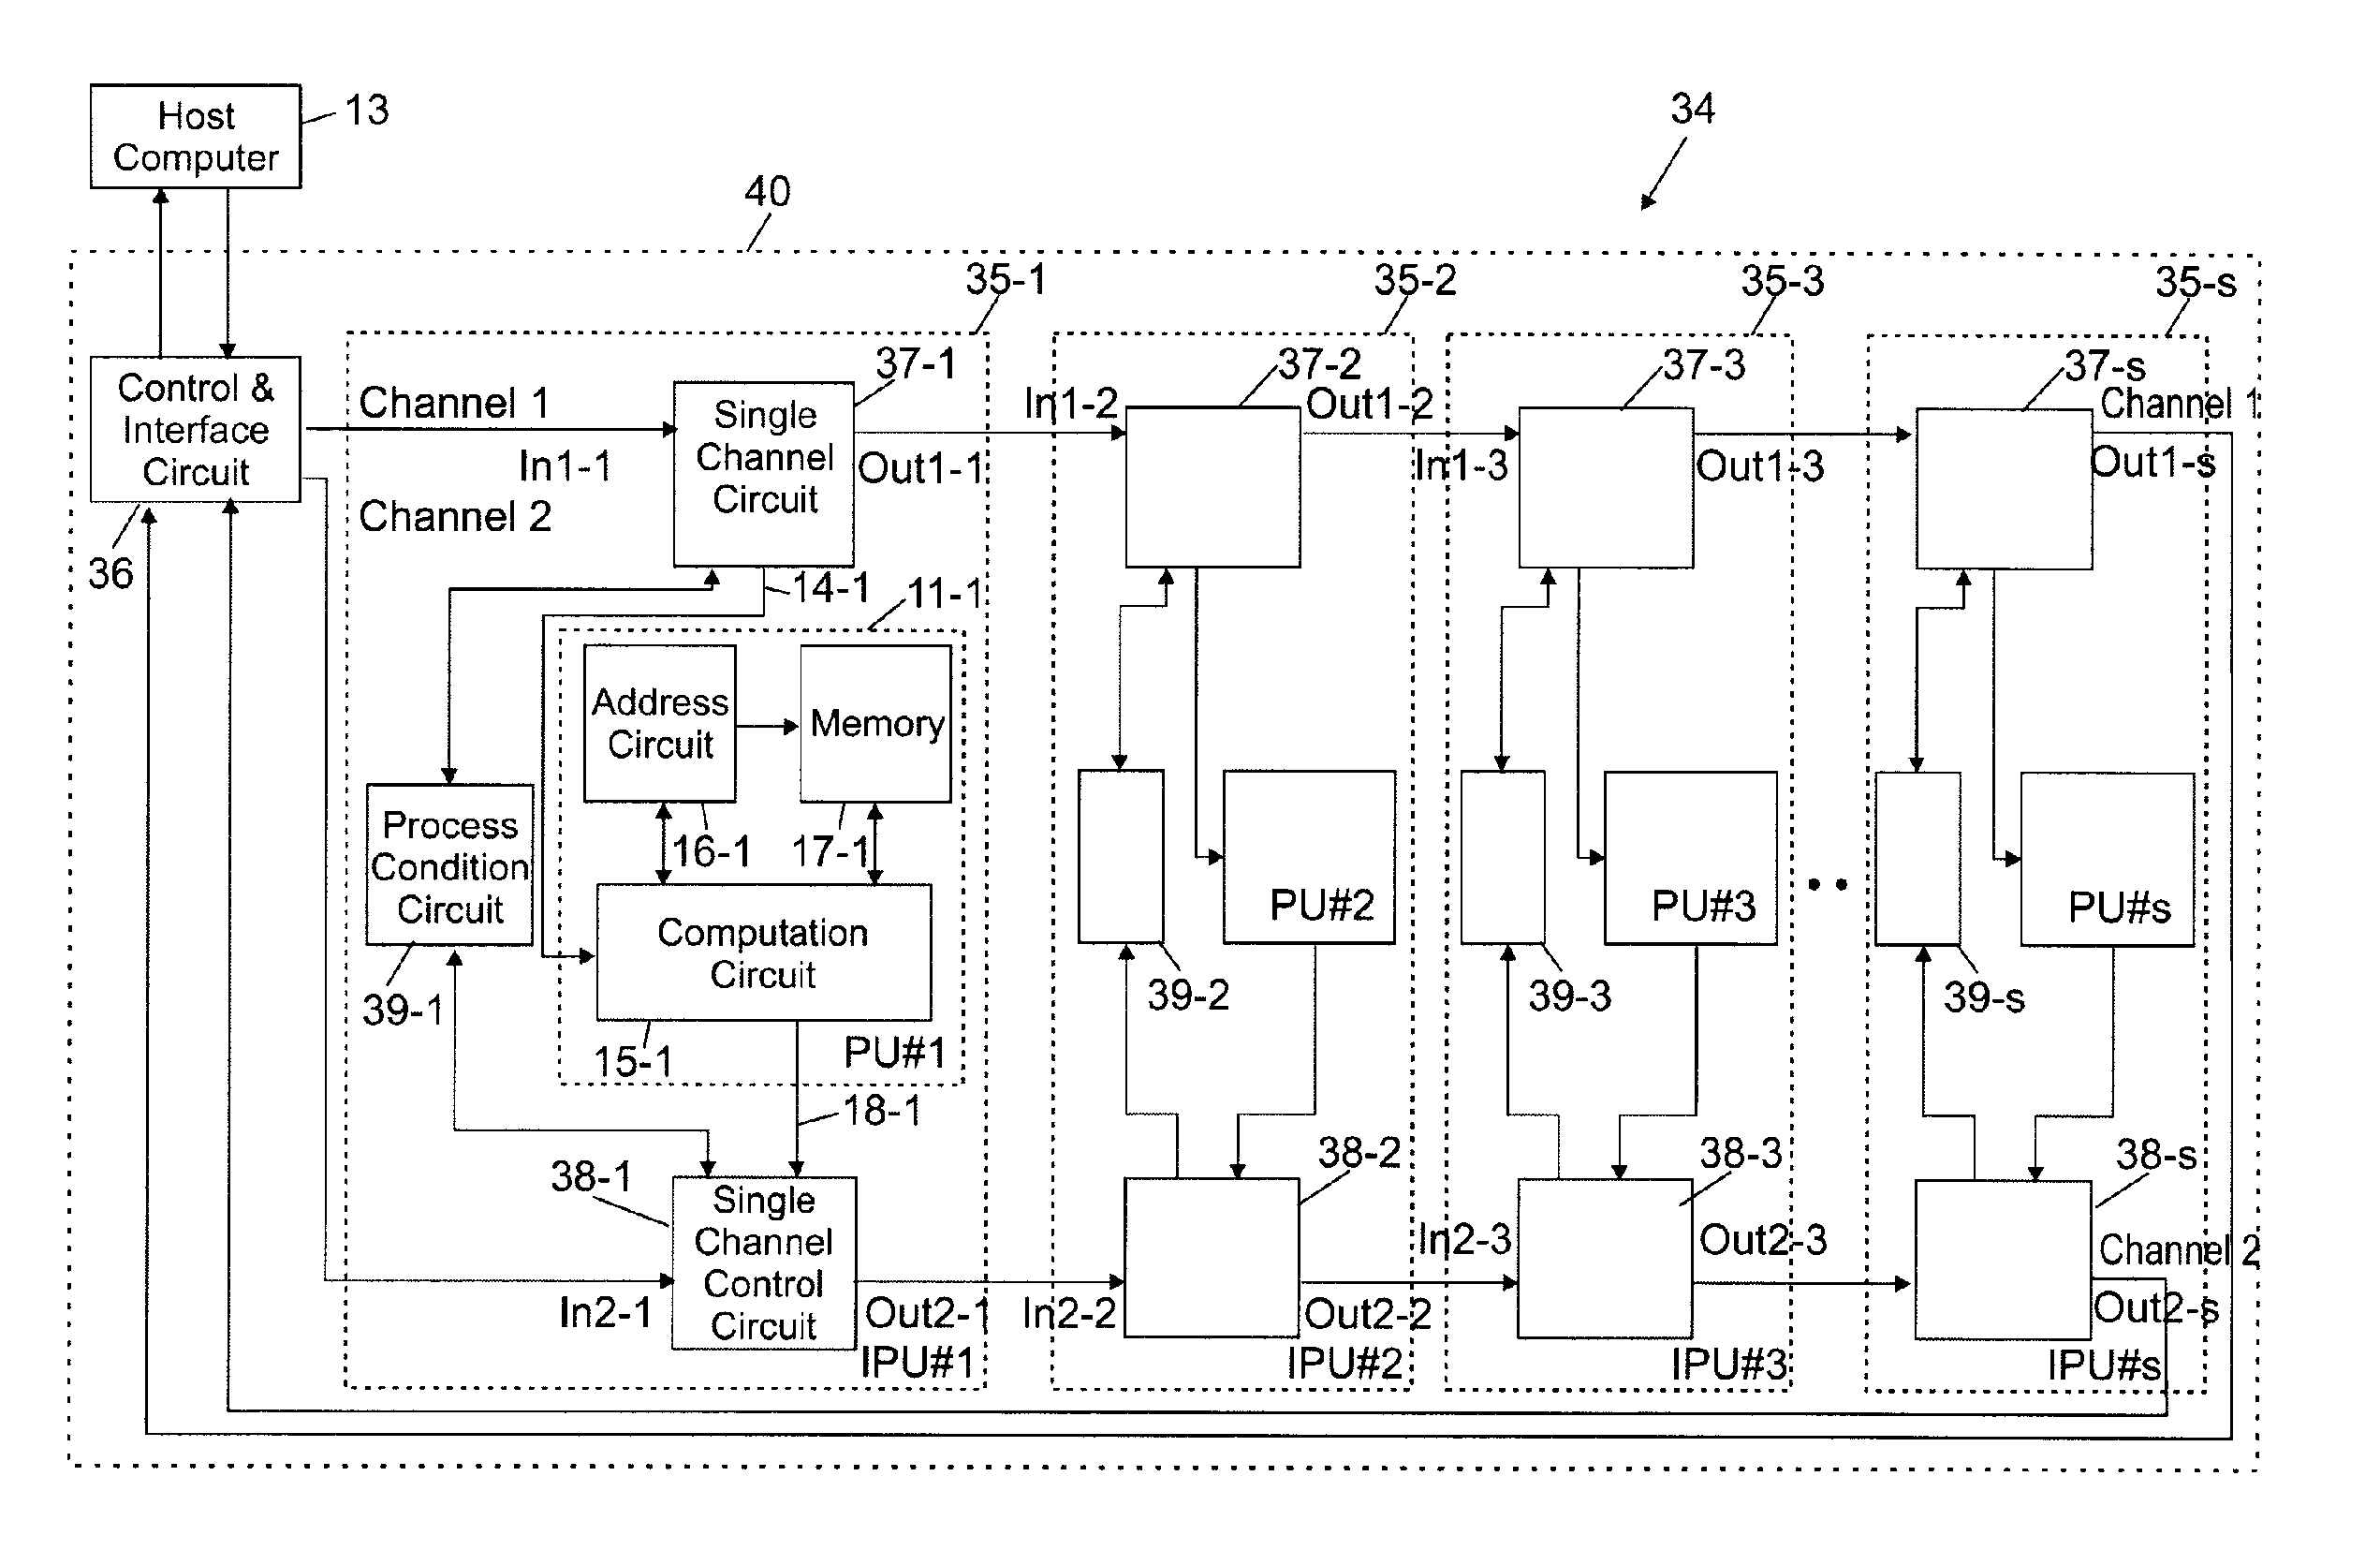 Processing unit having a dual channel bus architecture